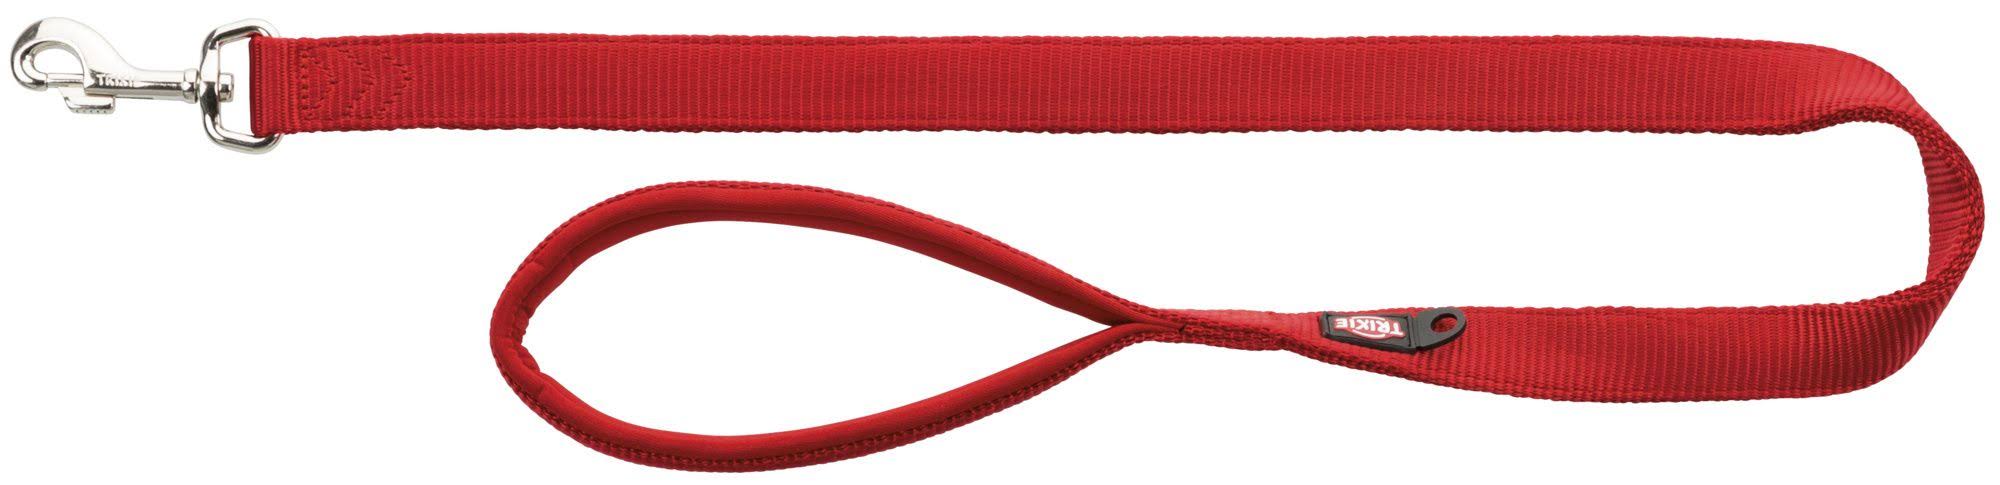 Trixie Premium Leash - Red (Extra Small - Small)